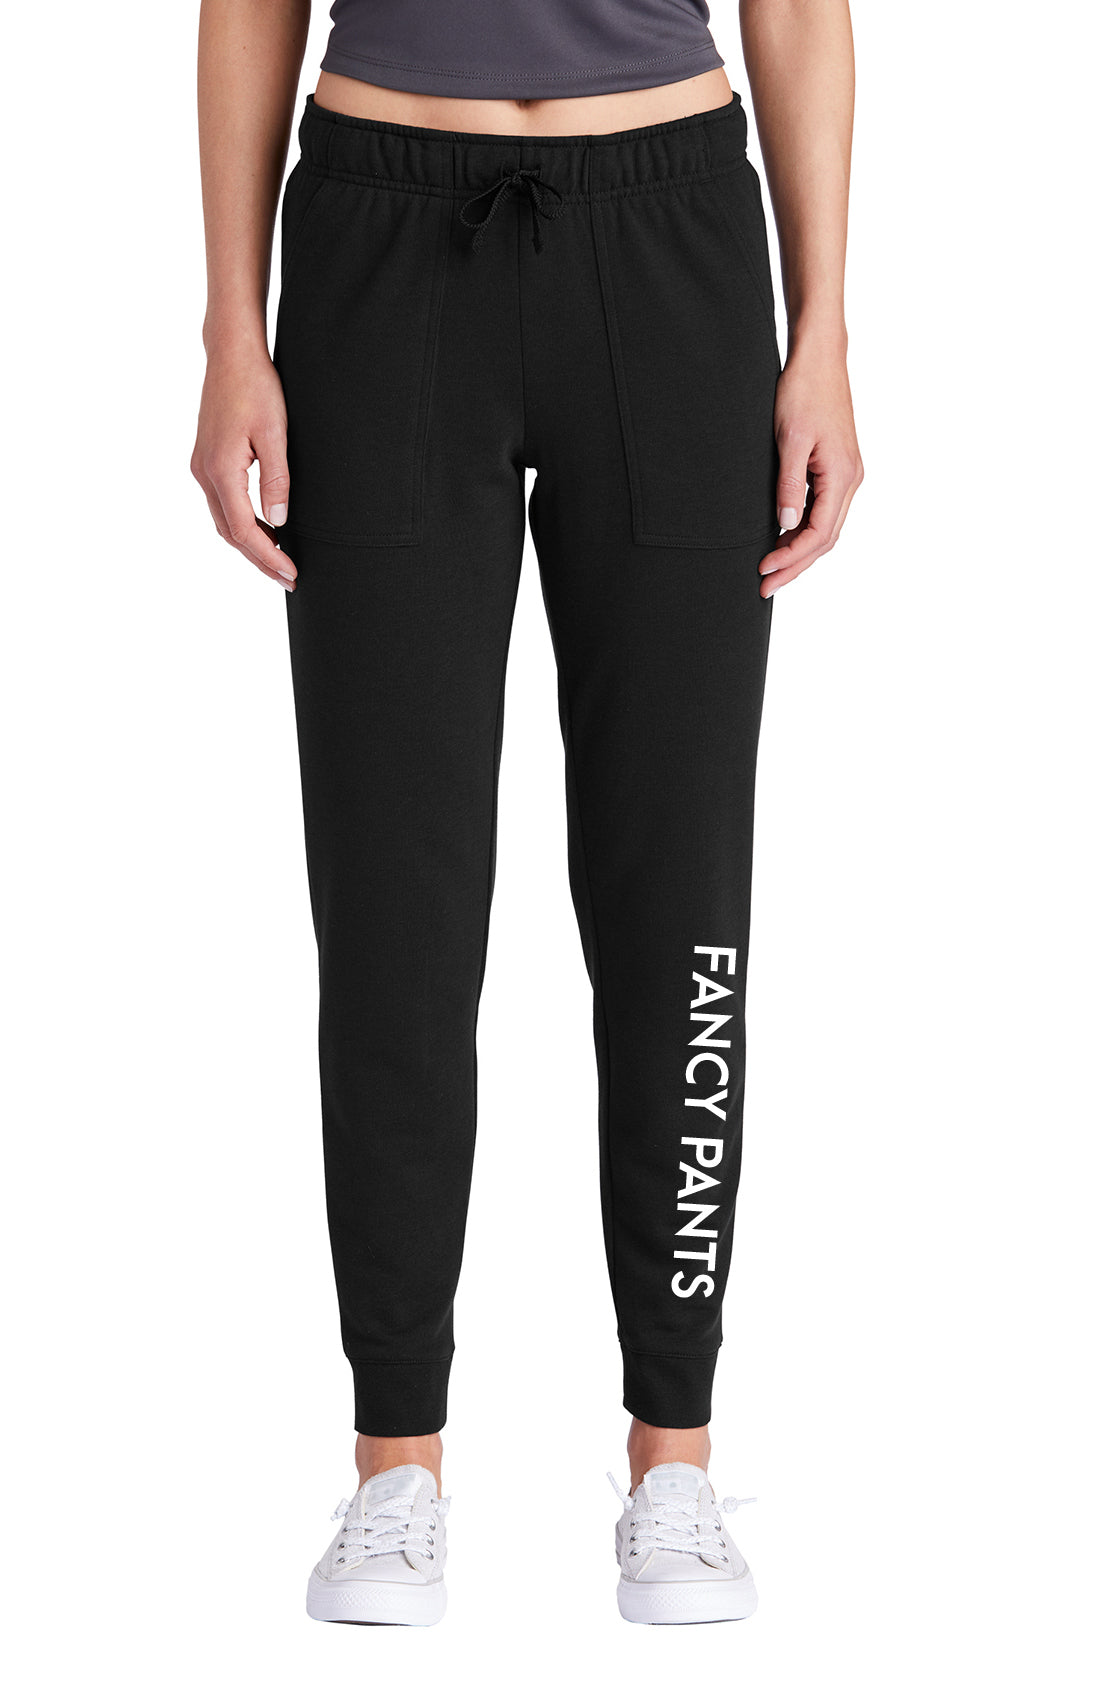 Fancy Pants (Black)- Ladies - XS